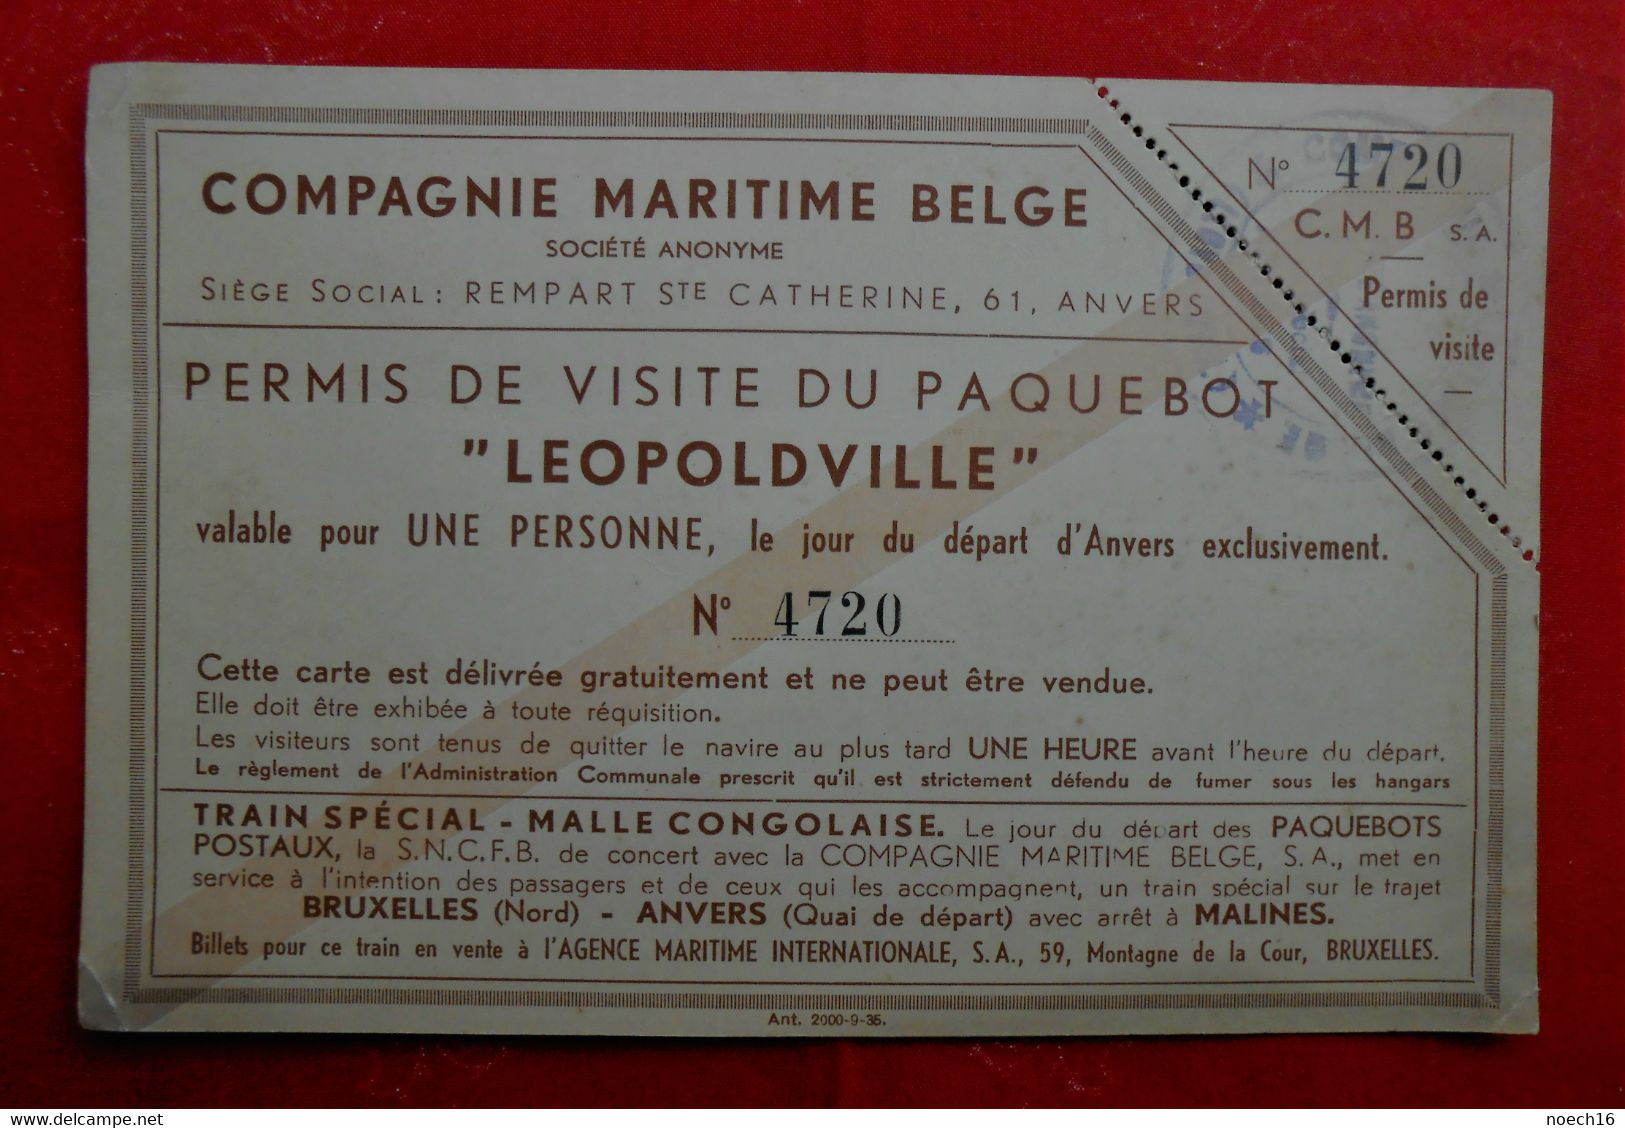 Compagnie Maritime Belge / Permis De Visite Du Paquebot "LEOPOLVILLE" - Eintrittskarten